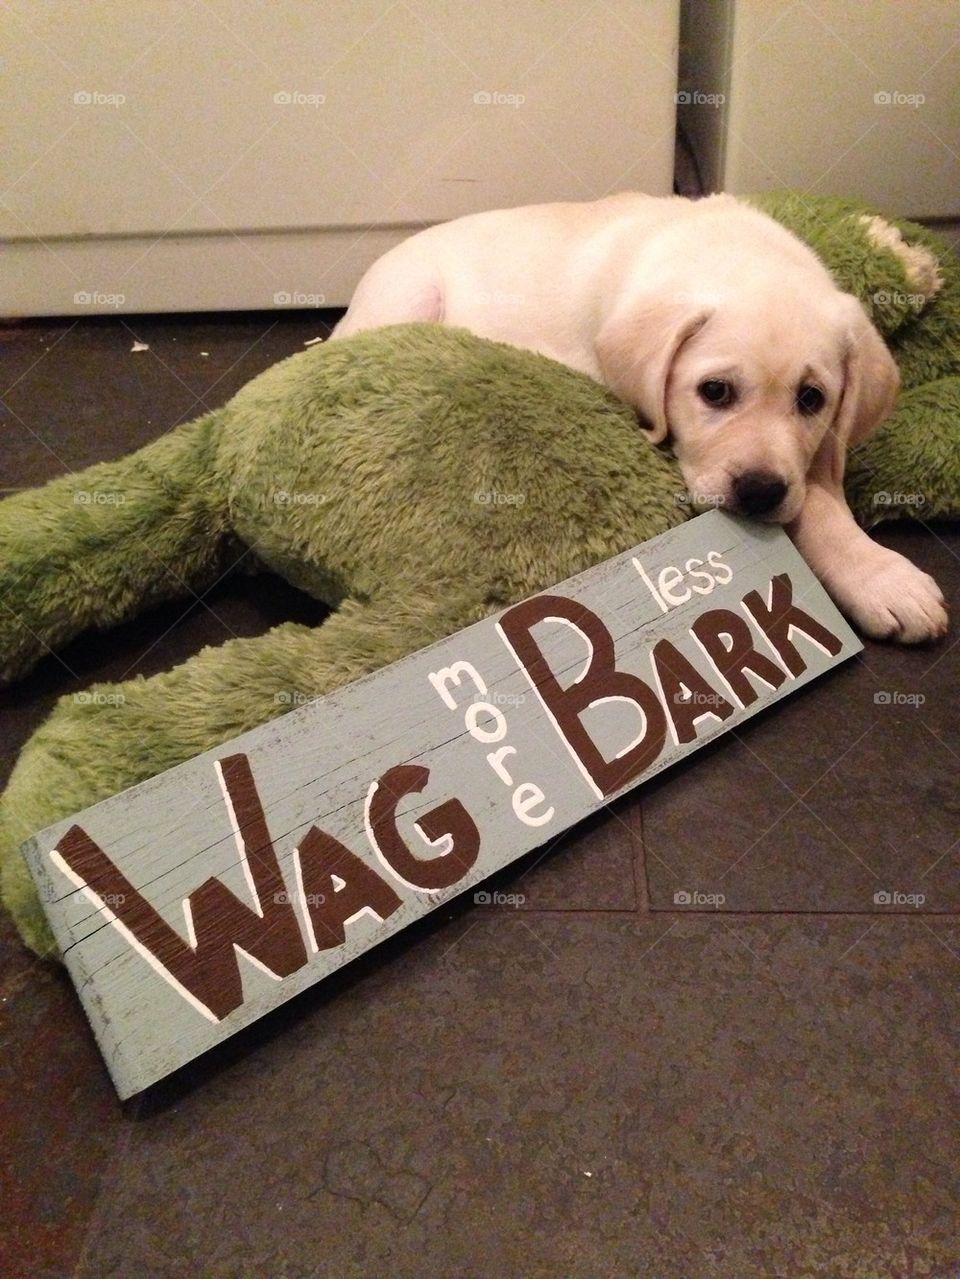 Wag more Bark less